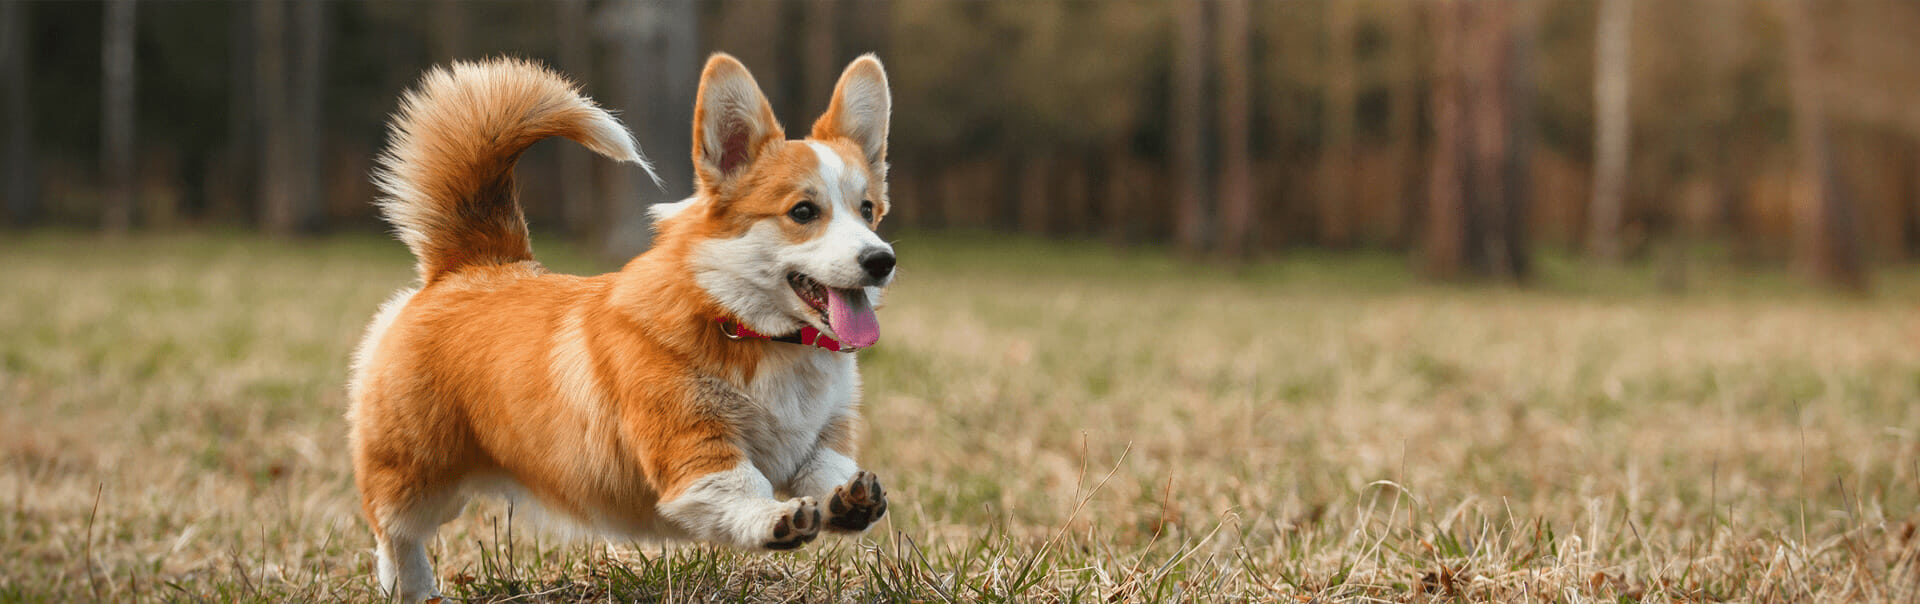 chien orange courant dans l'herbe verte